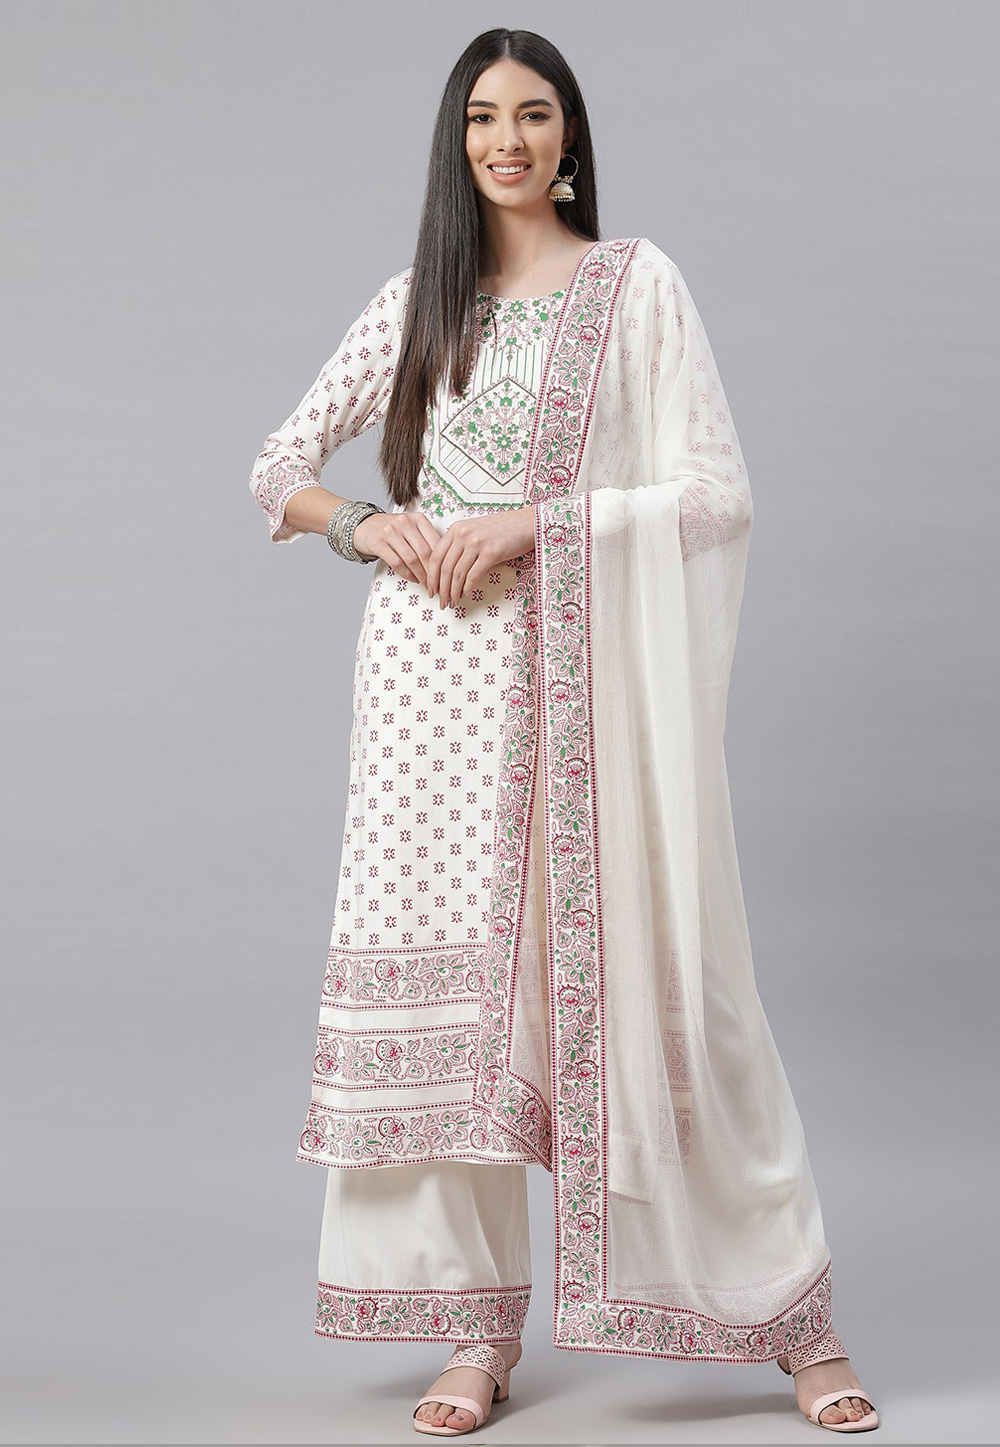 Indian Pakistani bollywood punjabi party bridal palazzo pants Salwar Kameez  40 | eBay